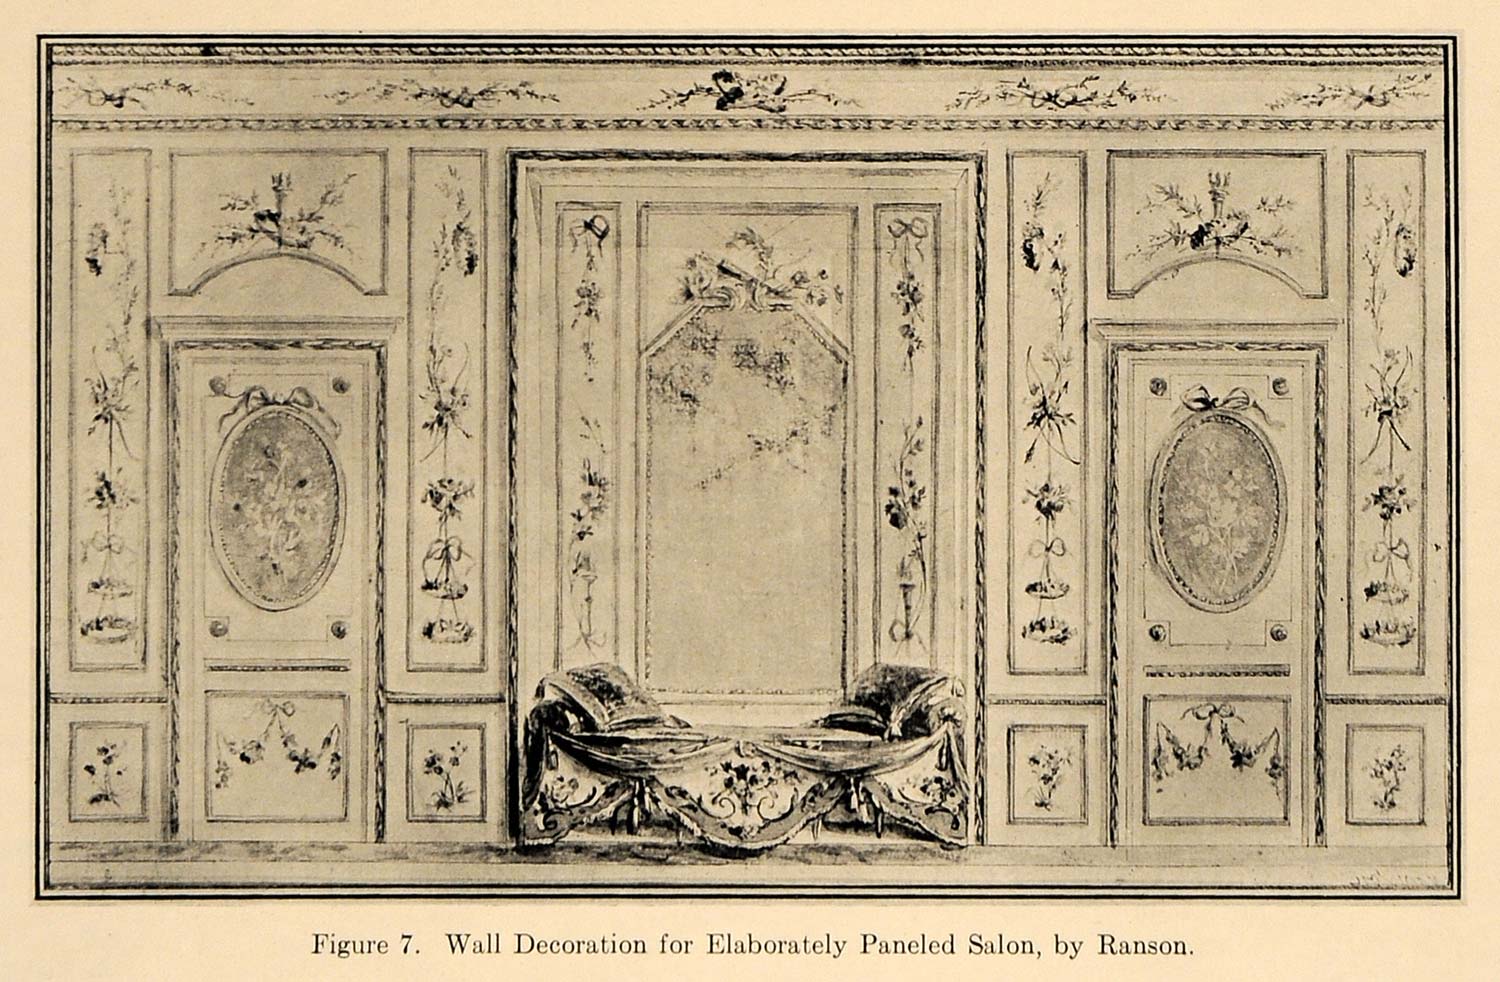 1919 Print Wall Decoration Elaborate Panel Salon Ranson ORIGINAL HISTORIC GF4